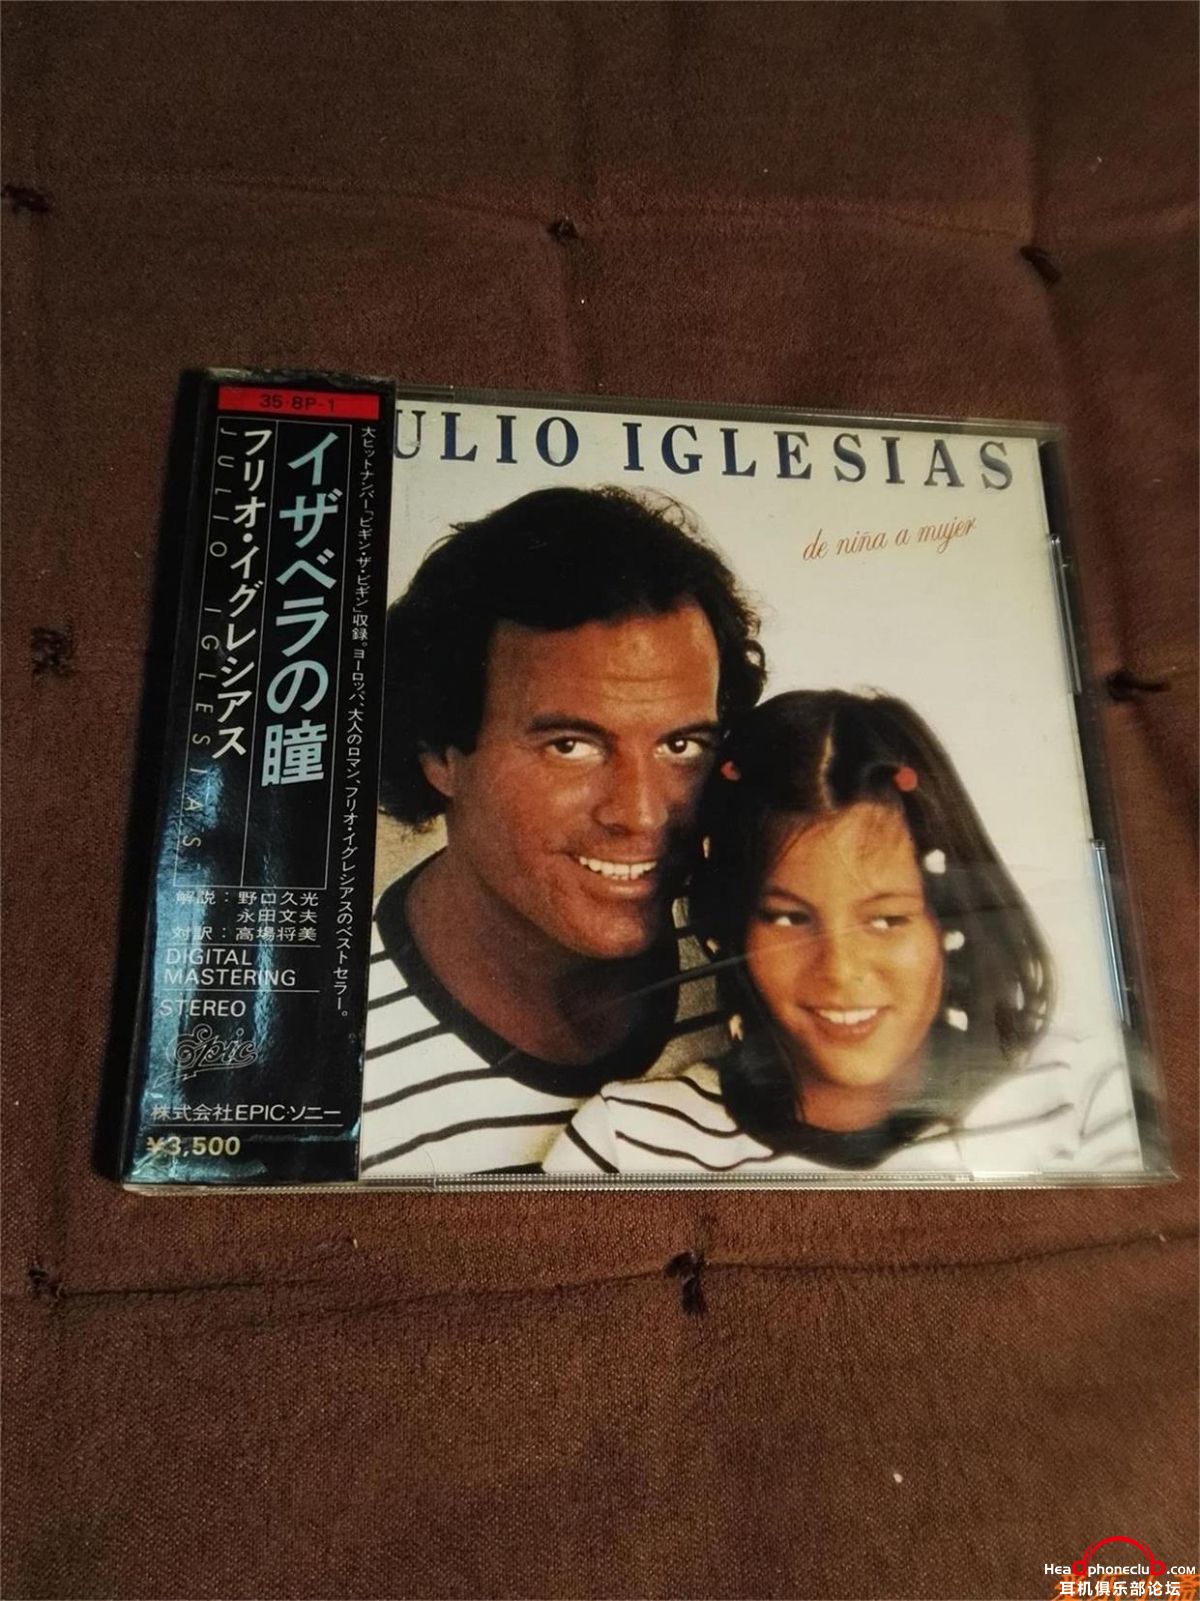 105 CD EPIC JULIO LGLESIAS- DE NINA A MUJER1.jpg